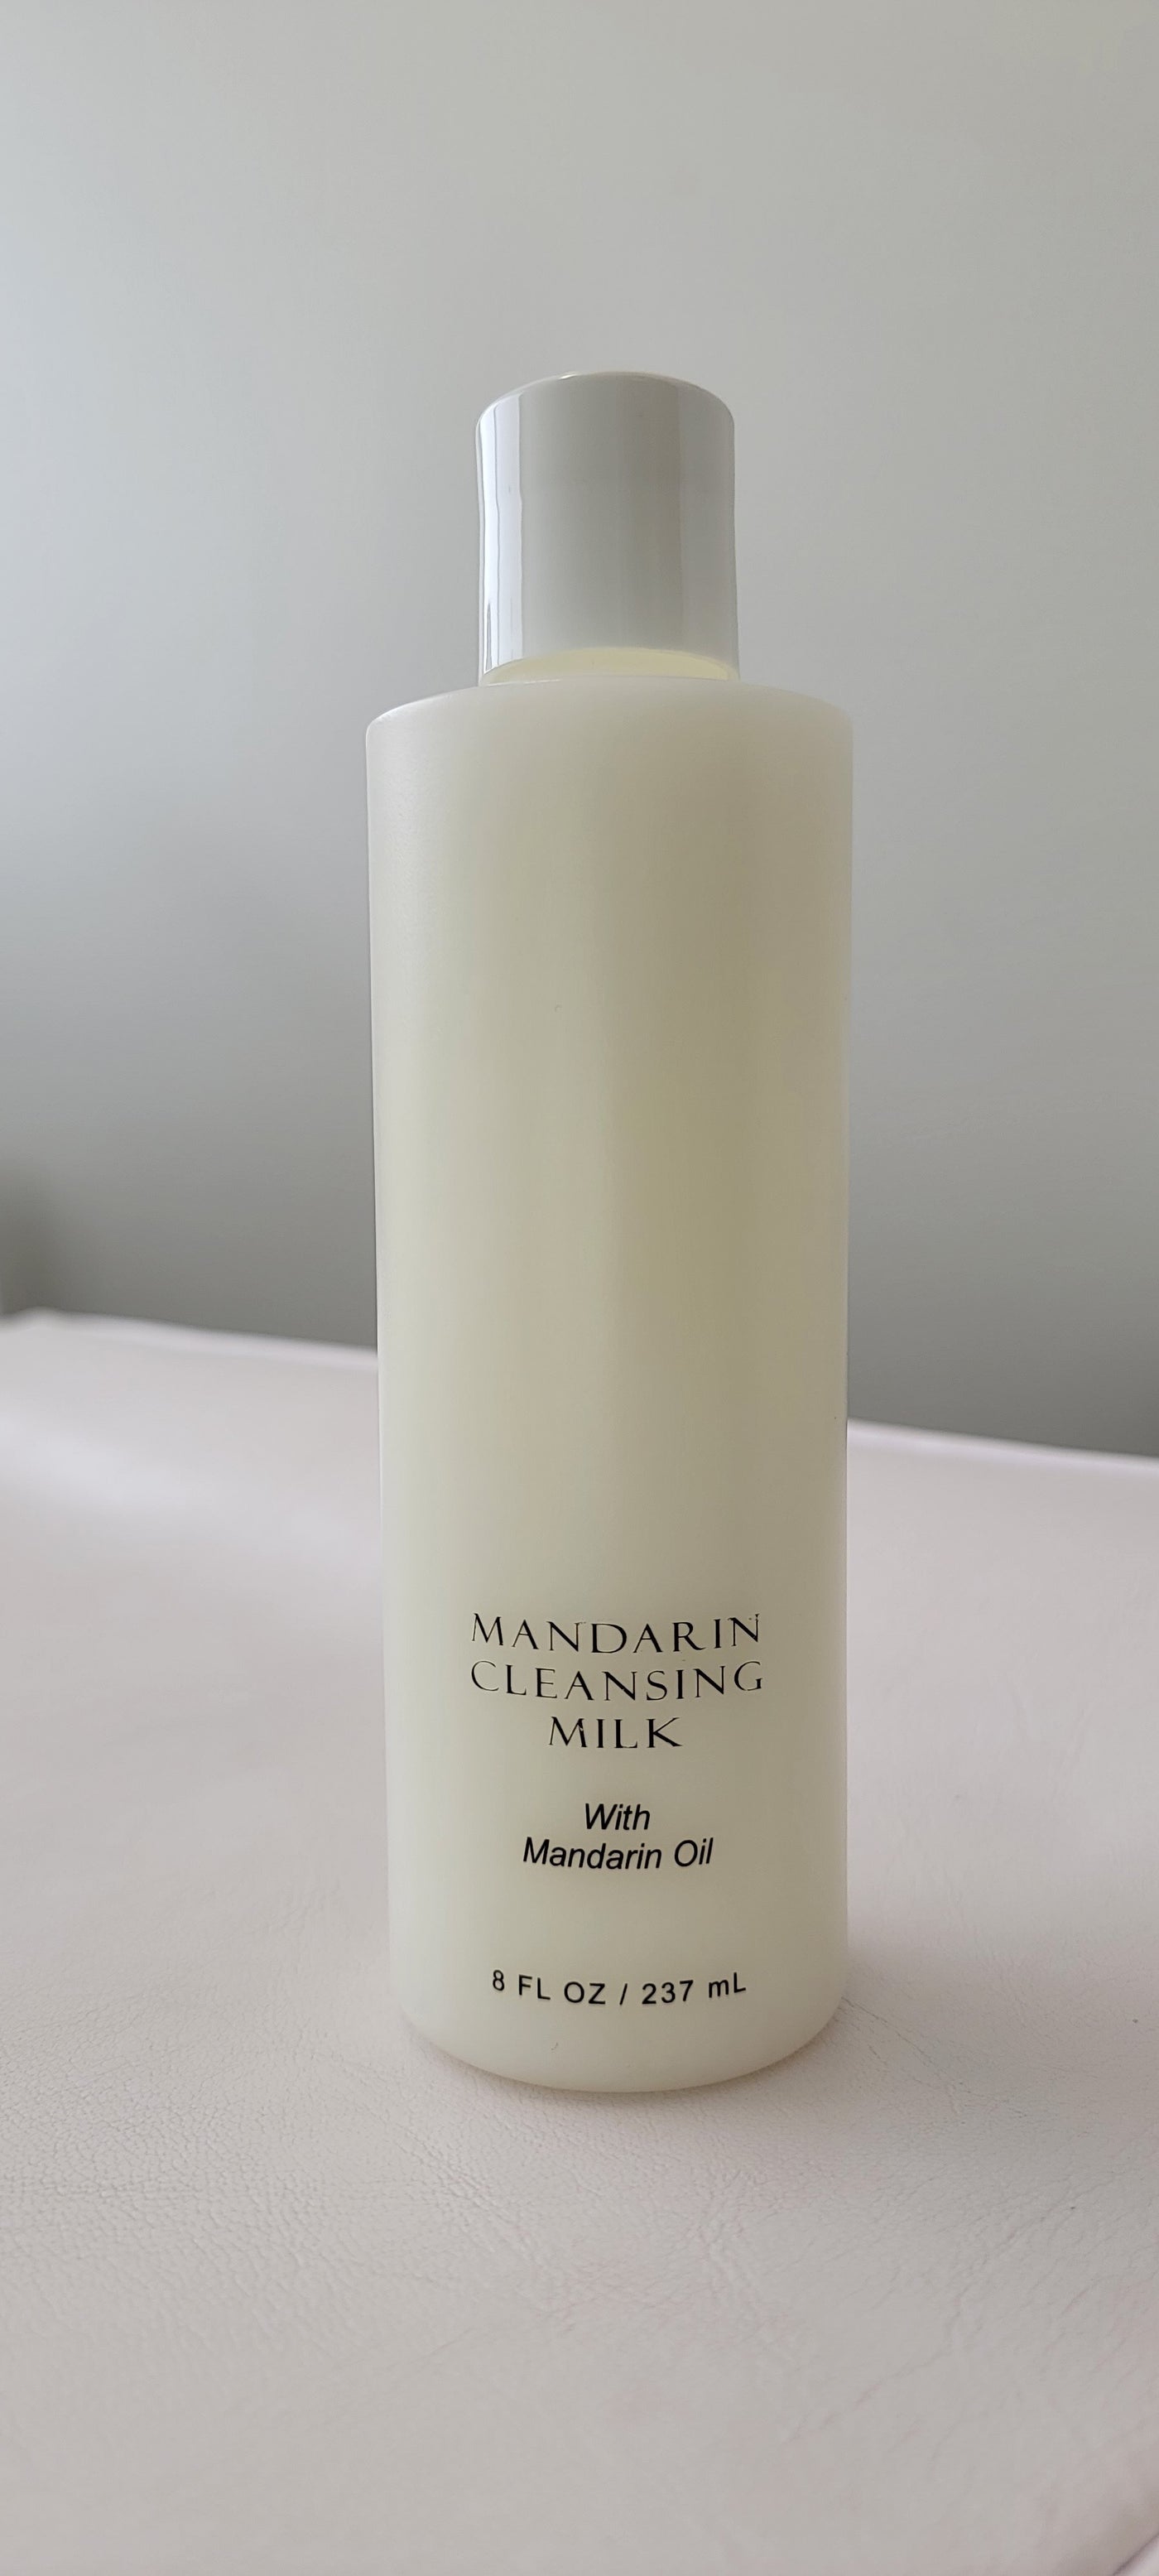 Mandarin Cleansing Milk